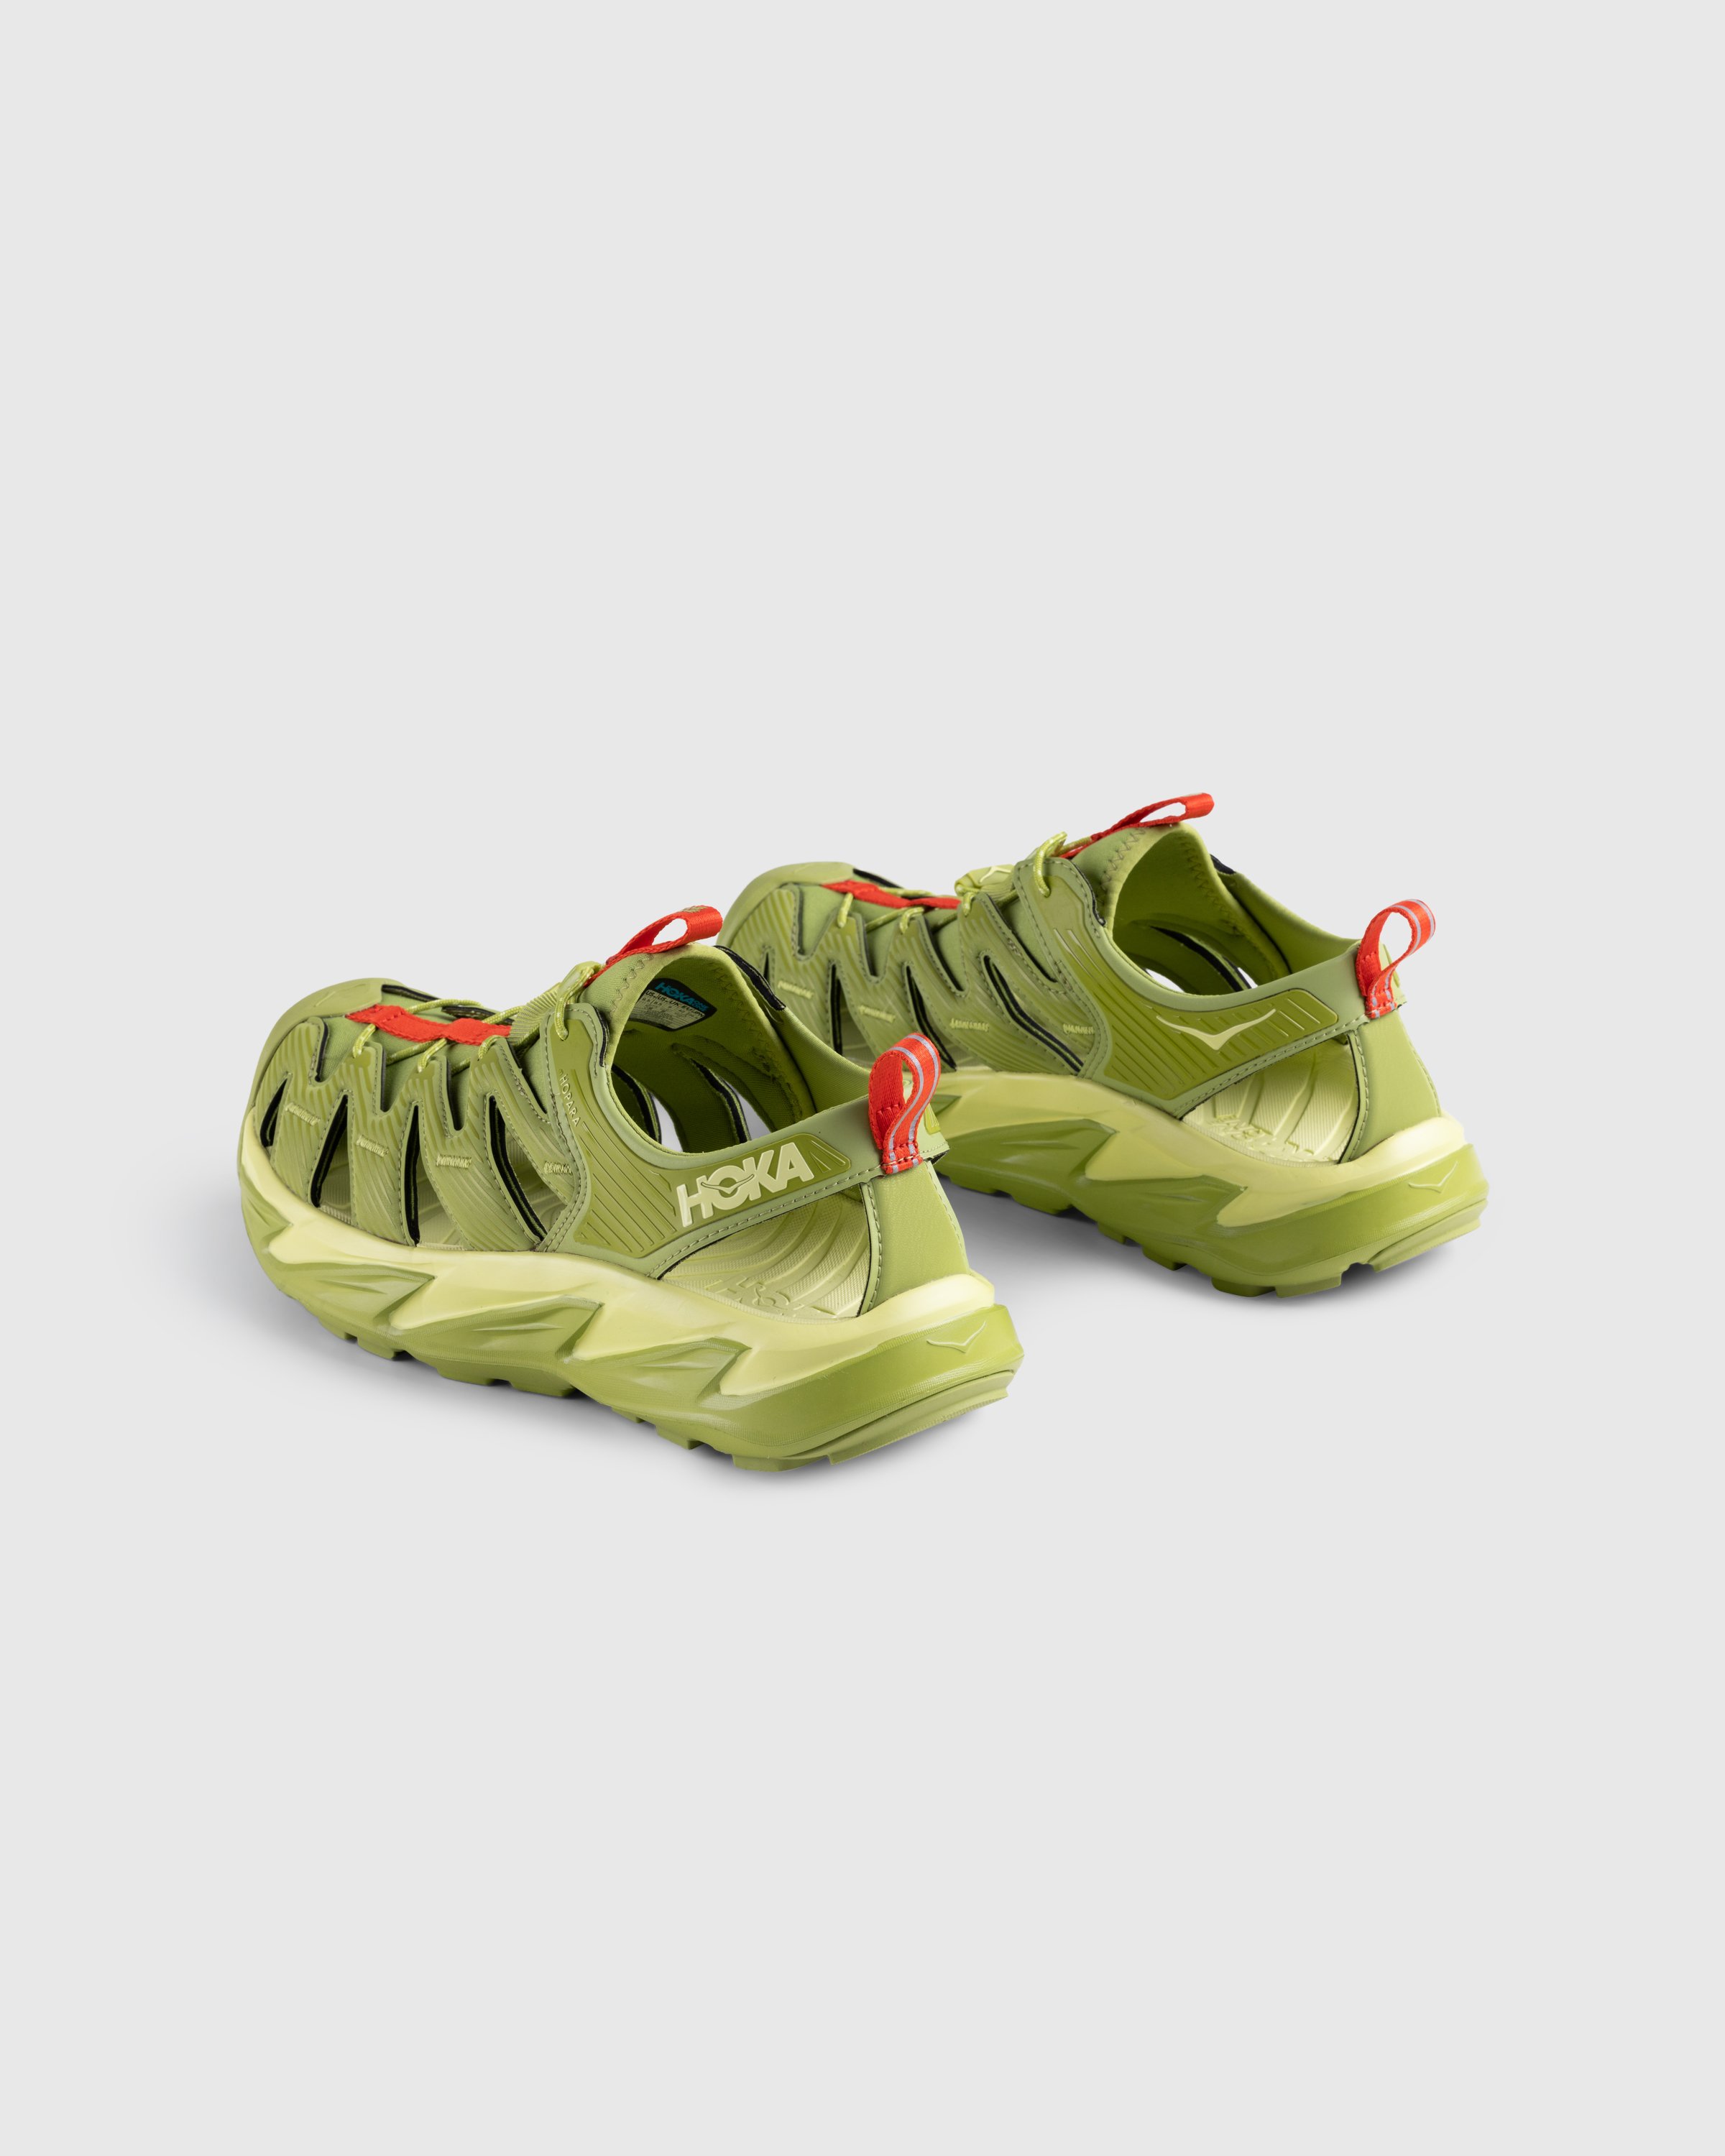 HOKA - HOPARA Dark Citron - Footwear - Green - Image 4